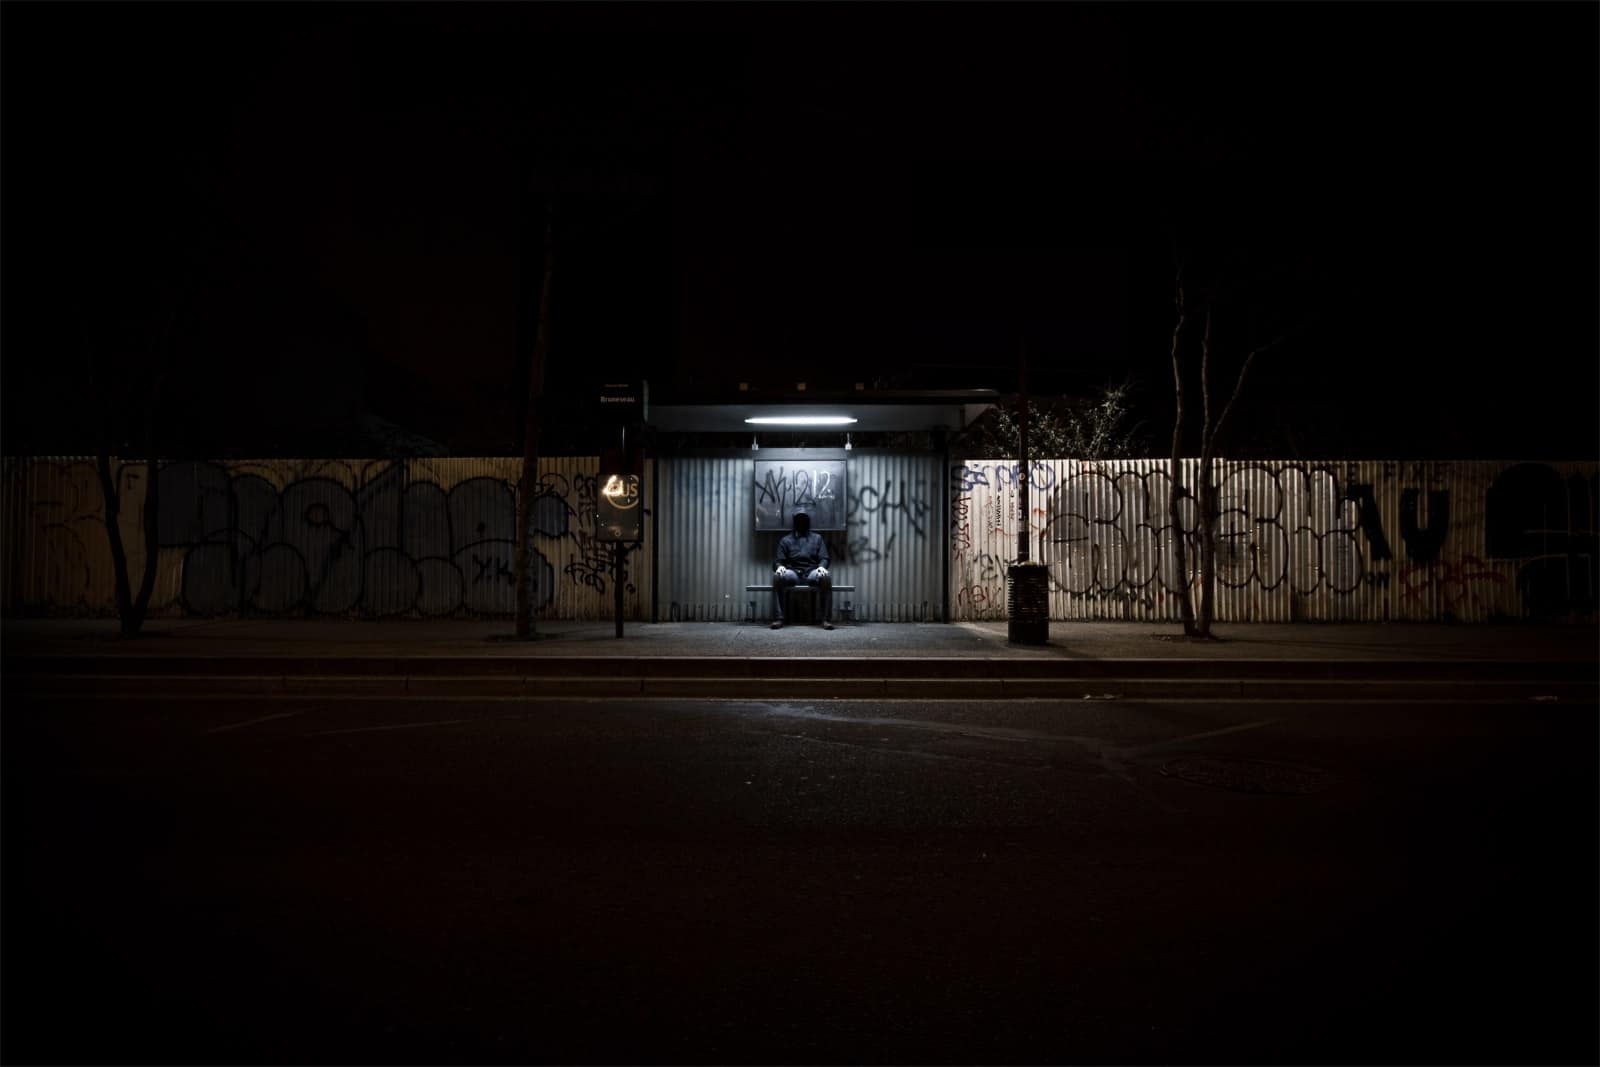 Night shelter - Night urban photography